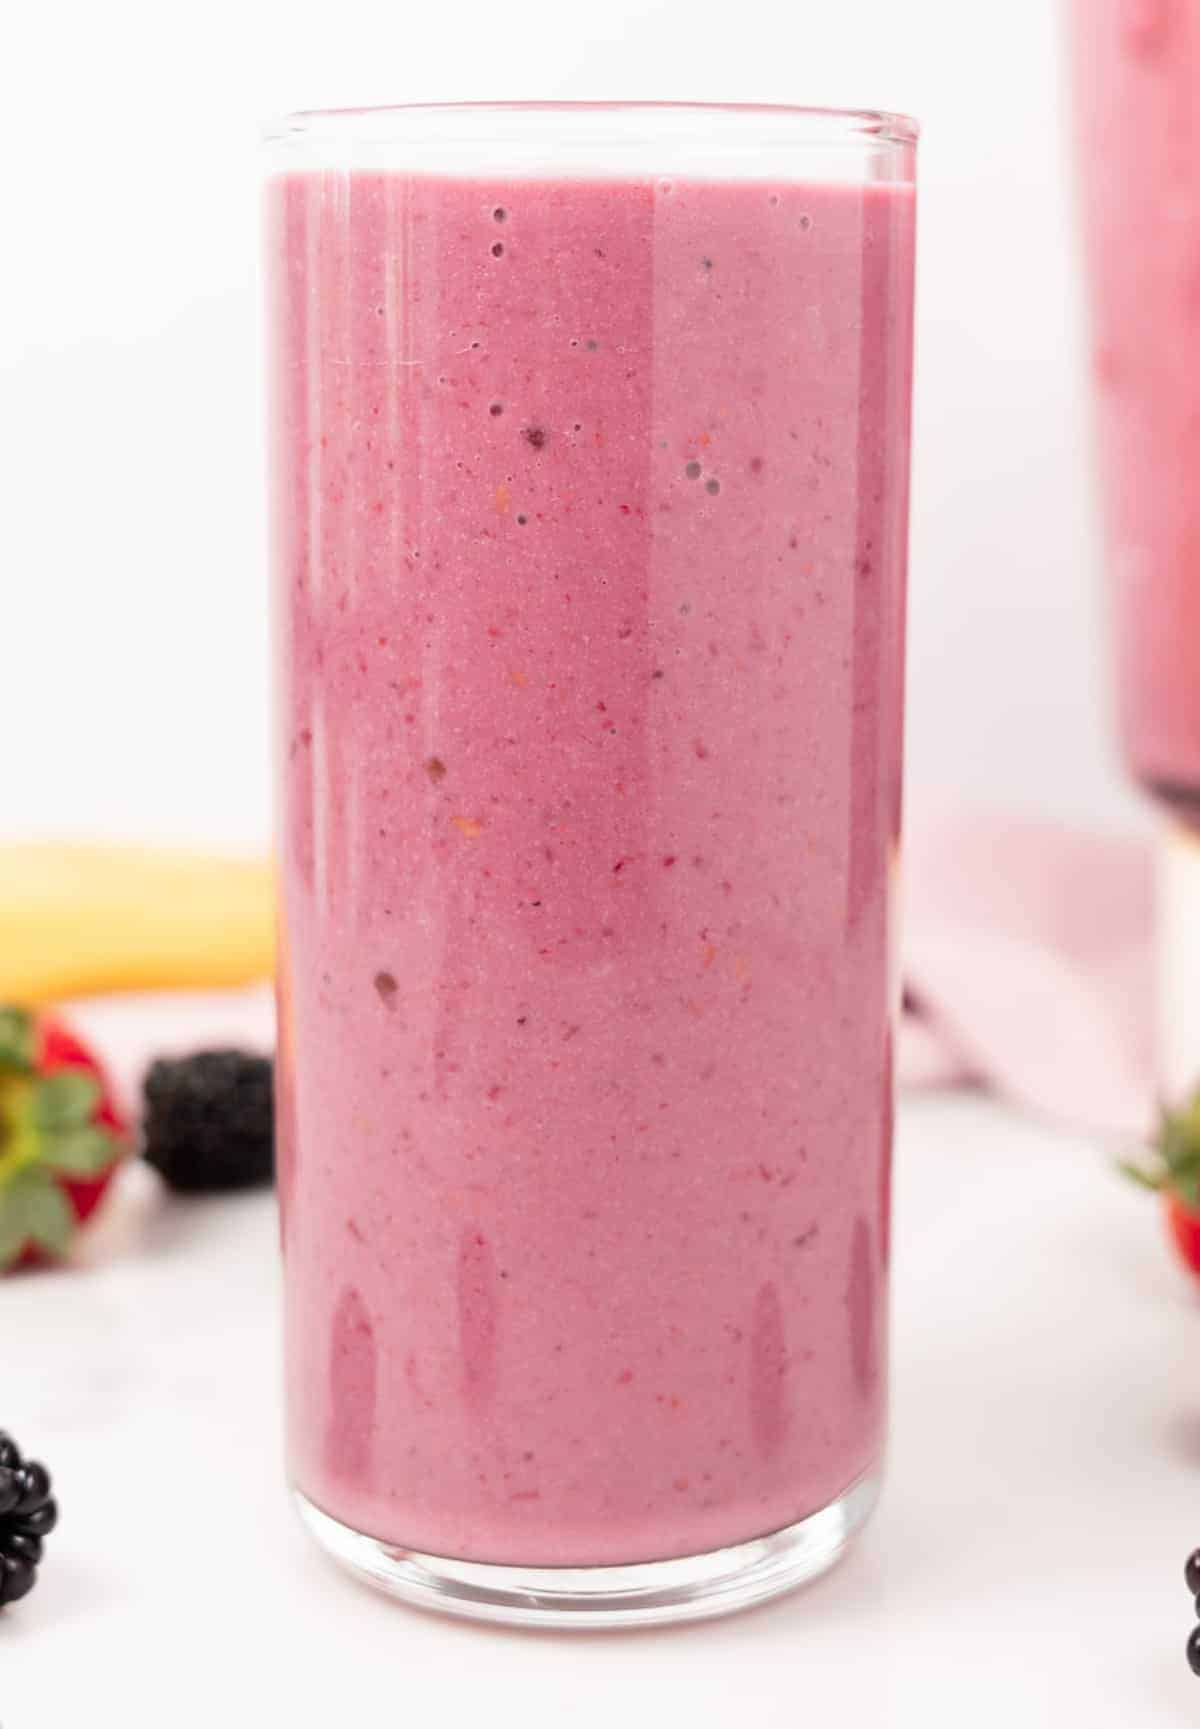 blackberry strawberry banana smoothie up close